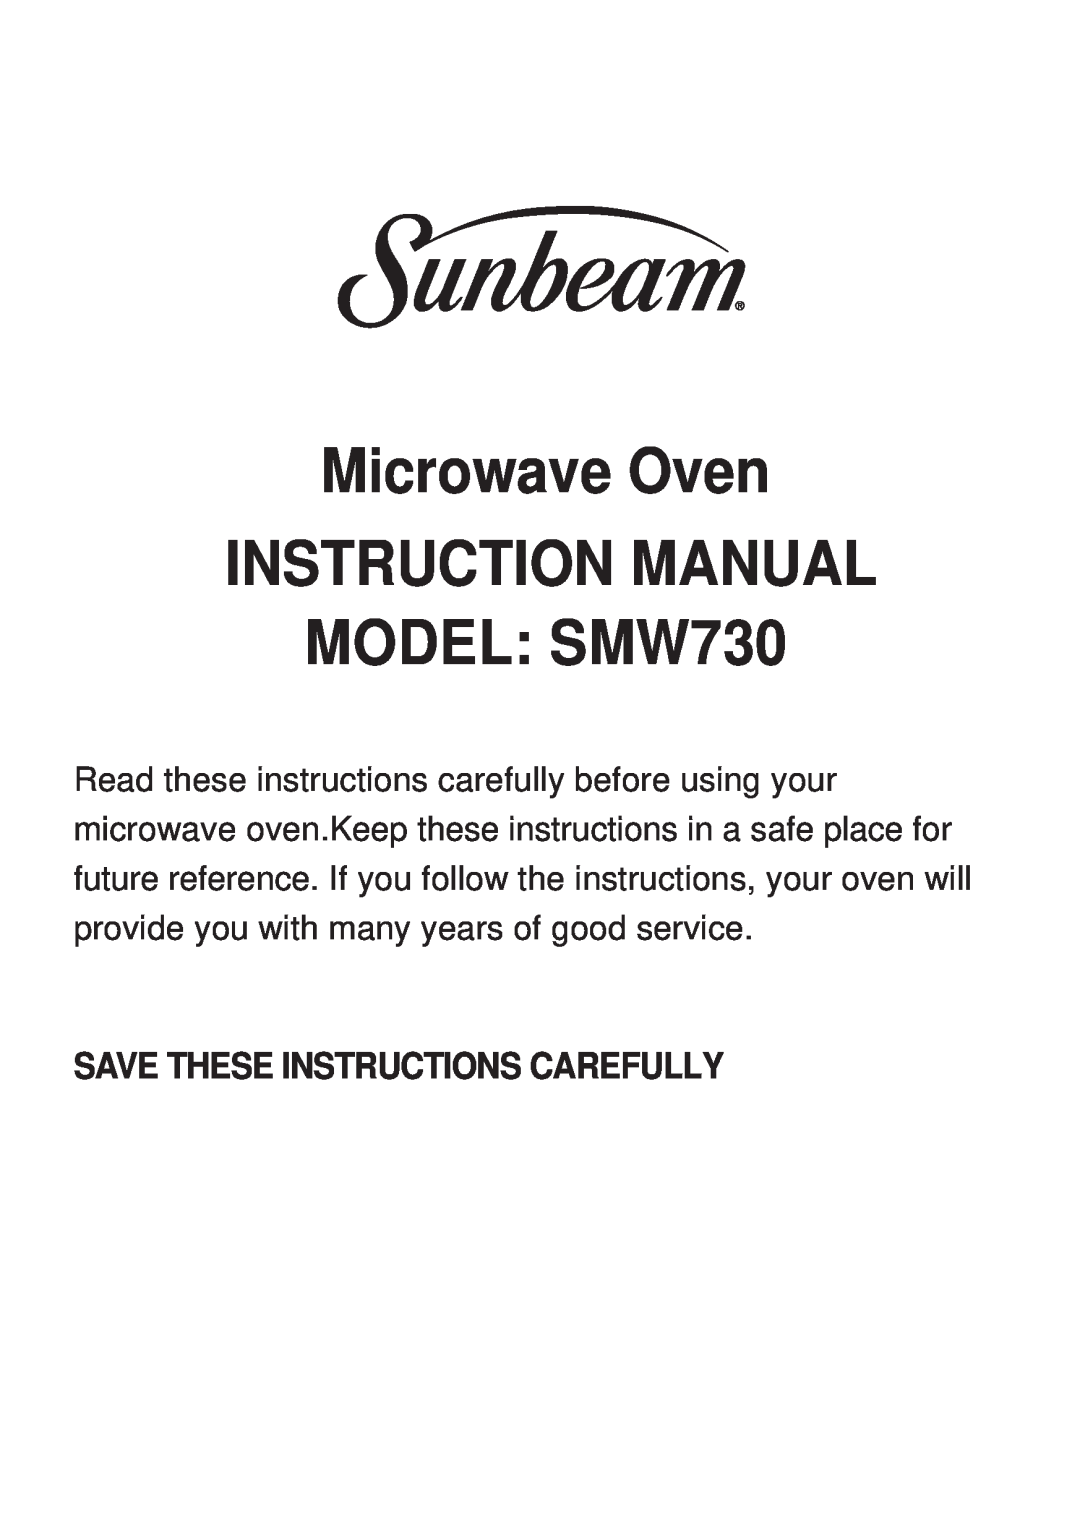 Sunbeam instruction manual Save These Instructions Carefully, Microwave Oven INSTRUCTION MANUAL MODEL SMW730 